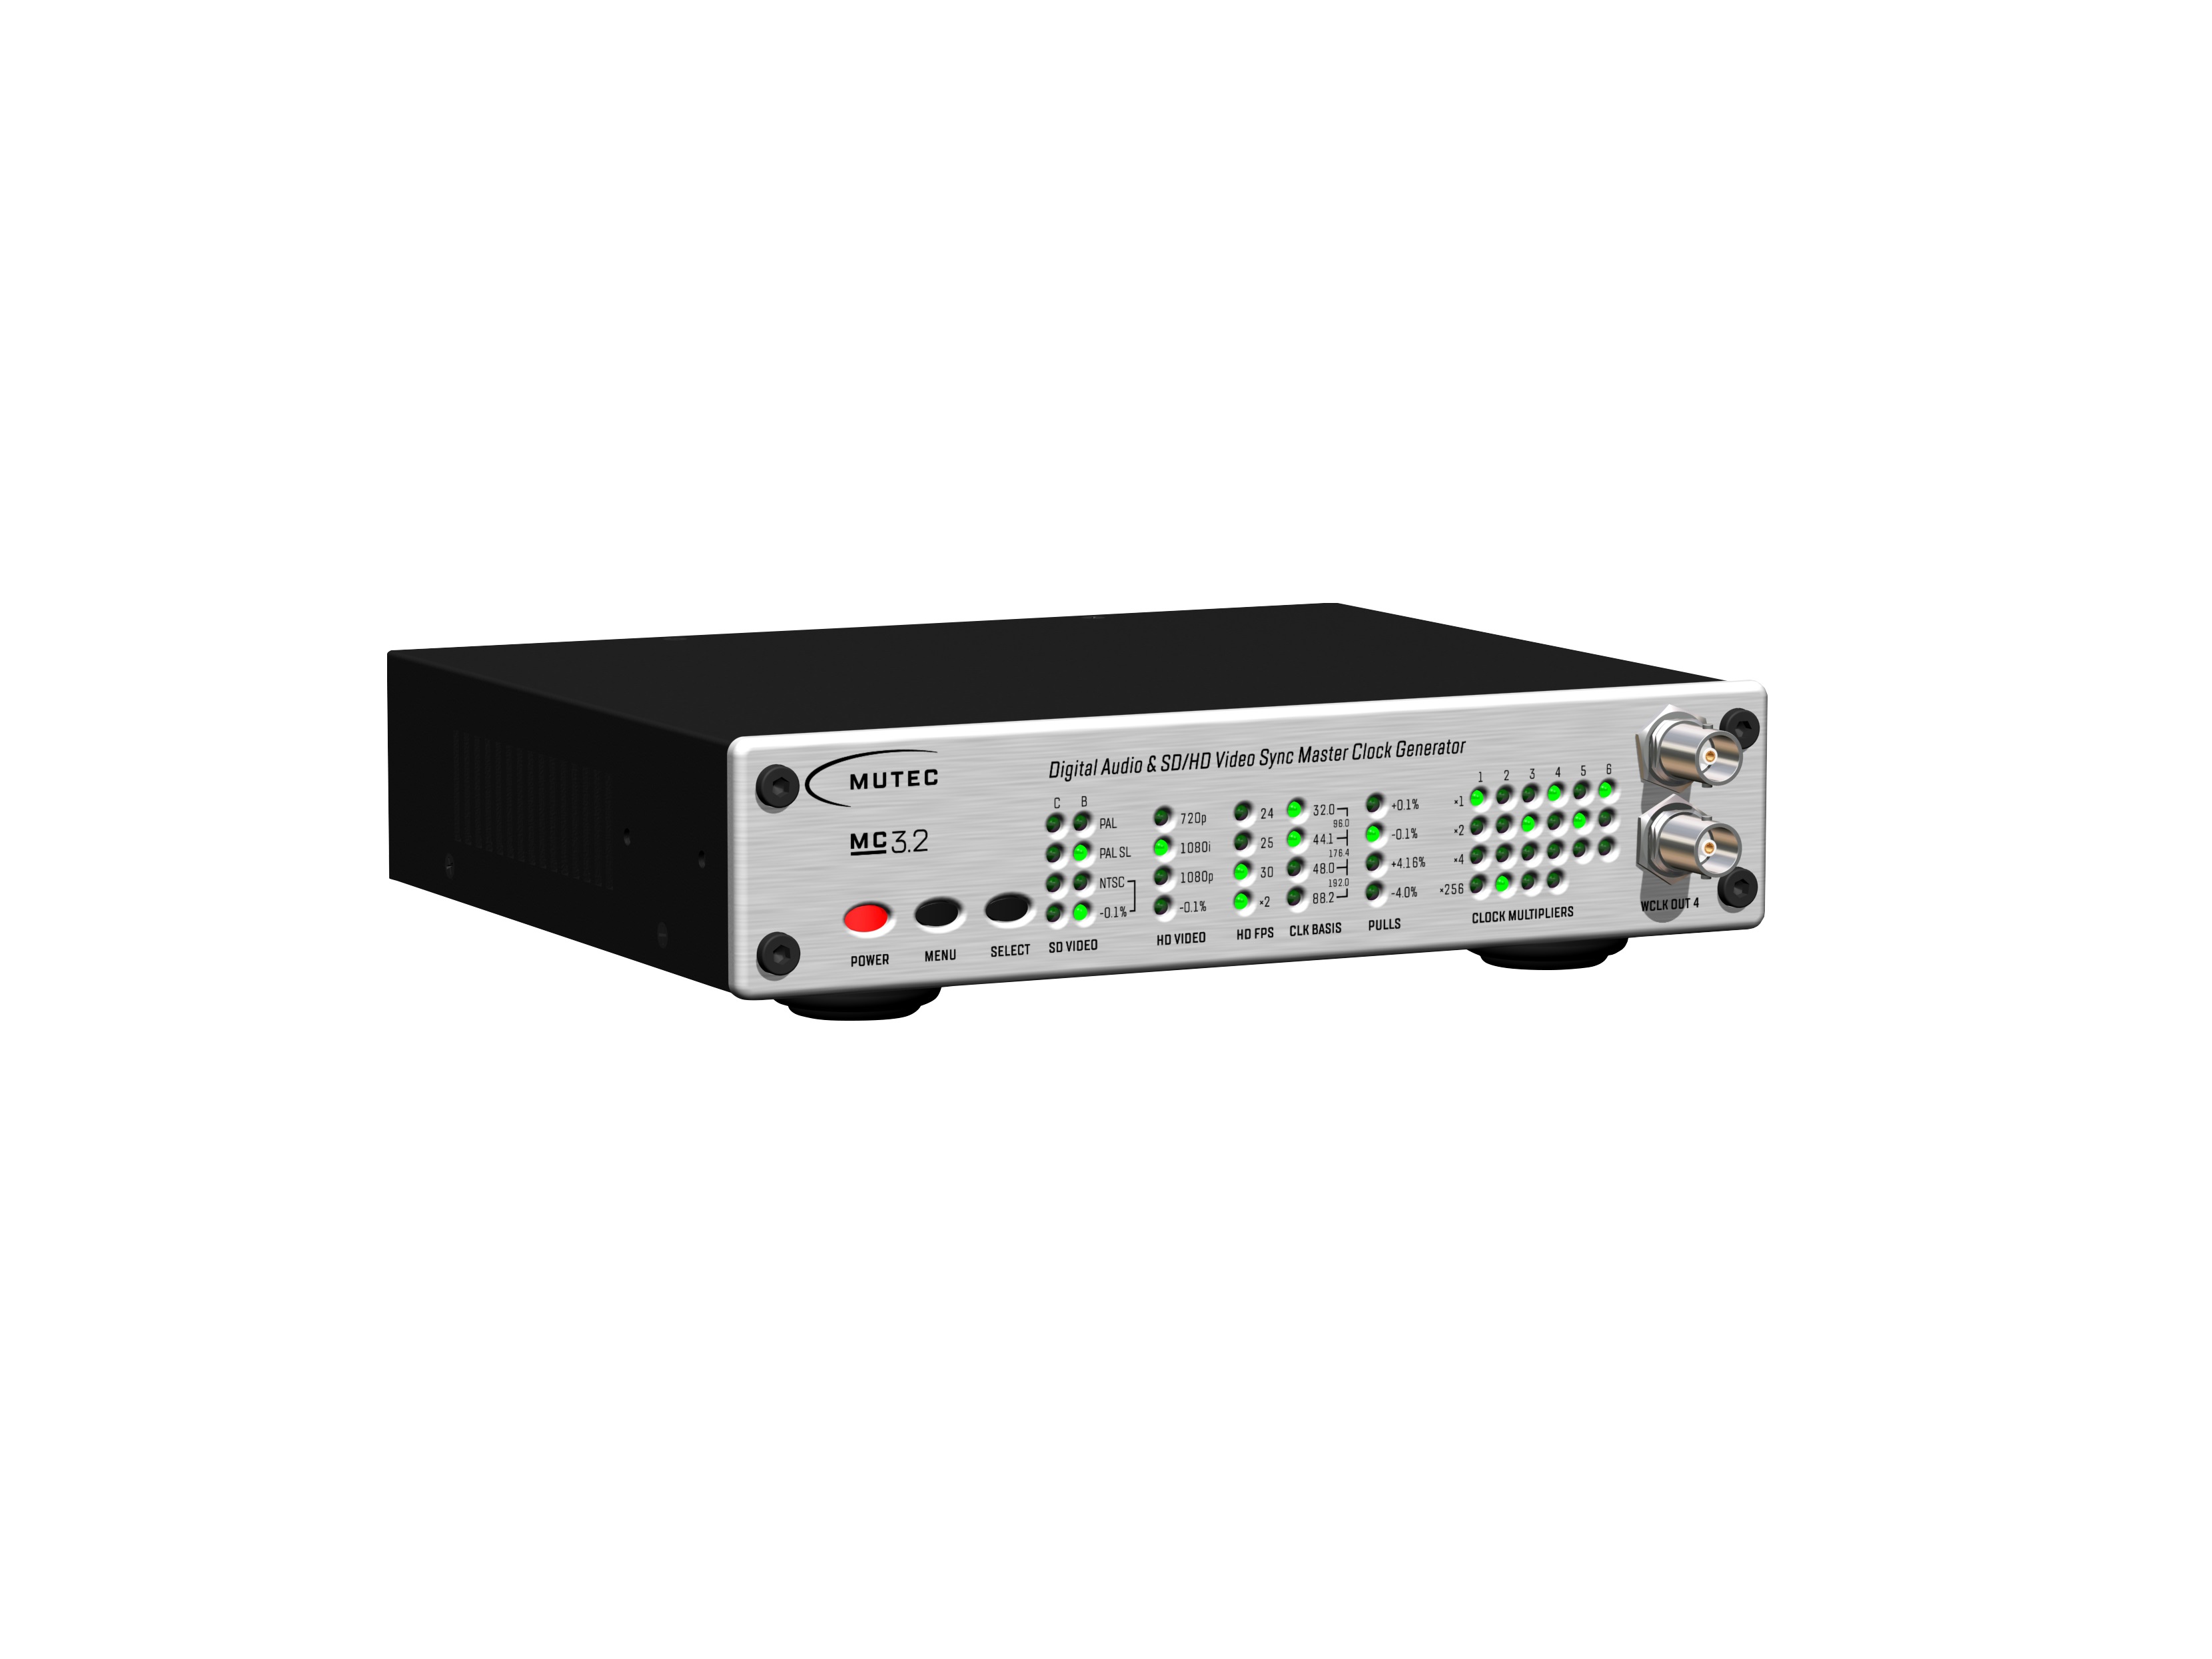 MC3.2 Digital Audio and SD/HD Video Sync Clock Generator by Mutec